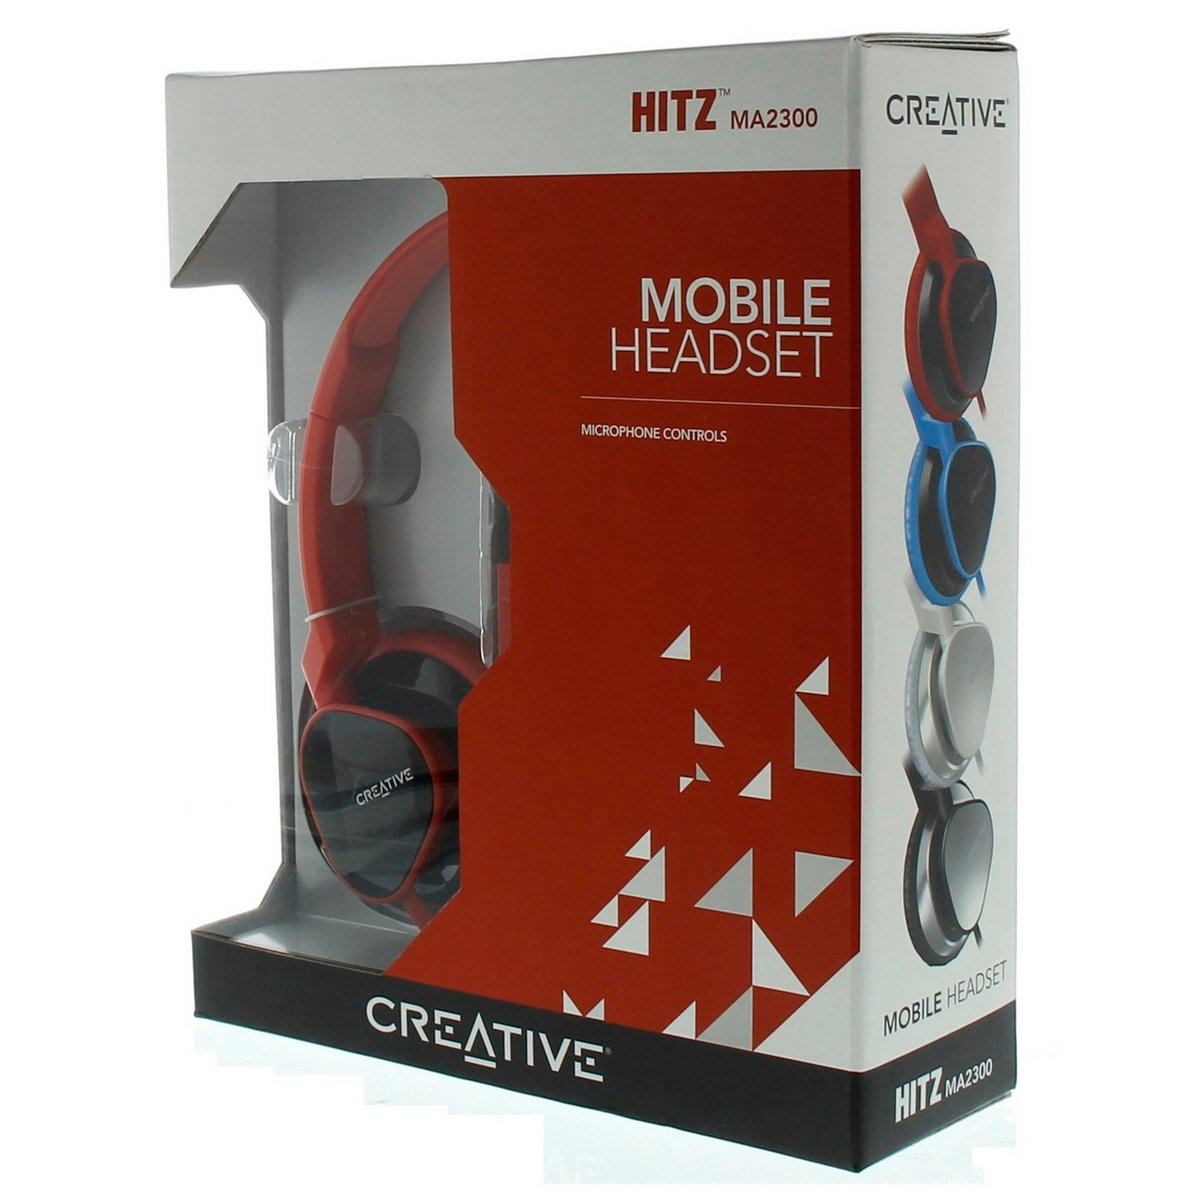 Creative Headset With Mic HITZ MA2300